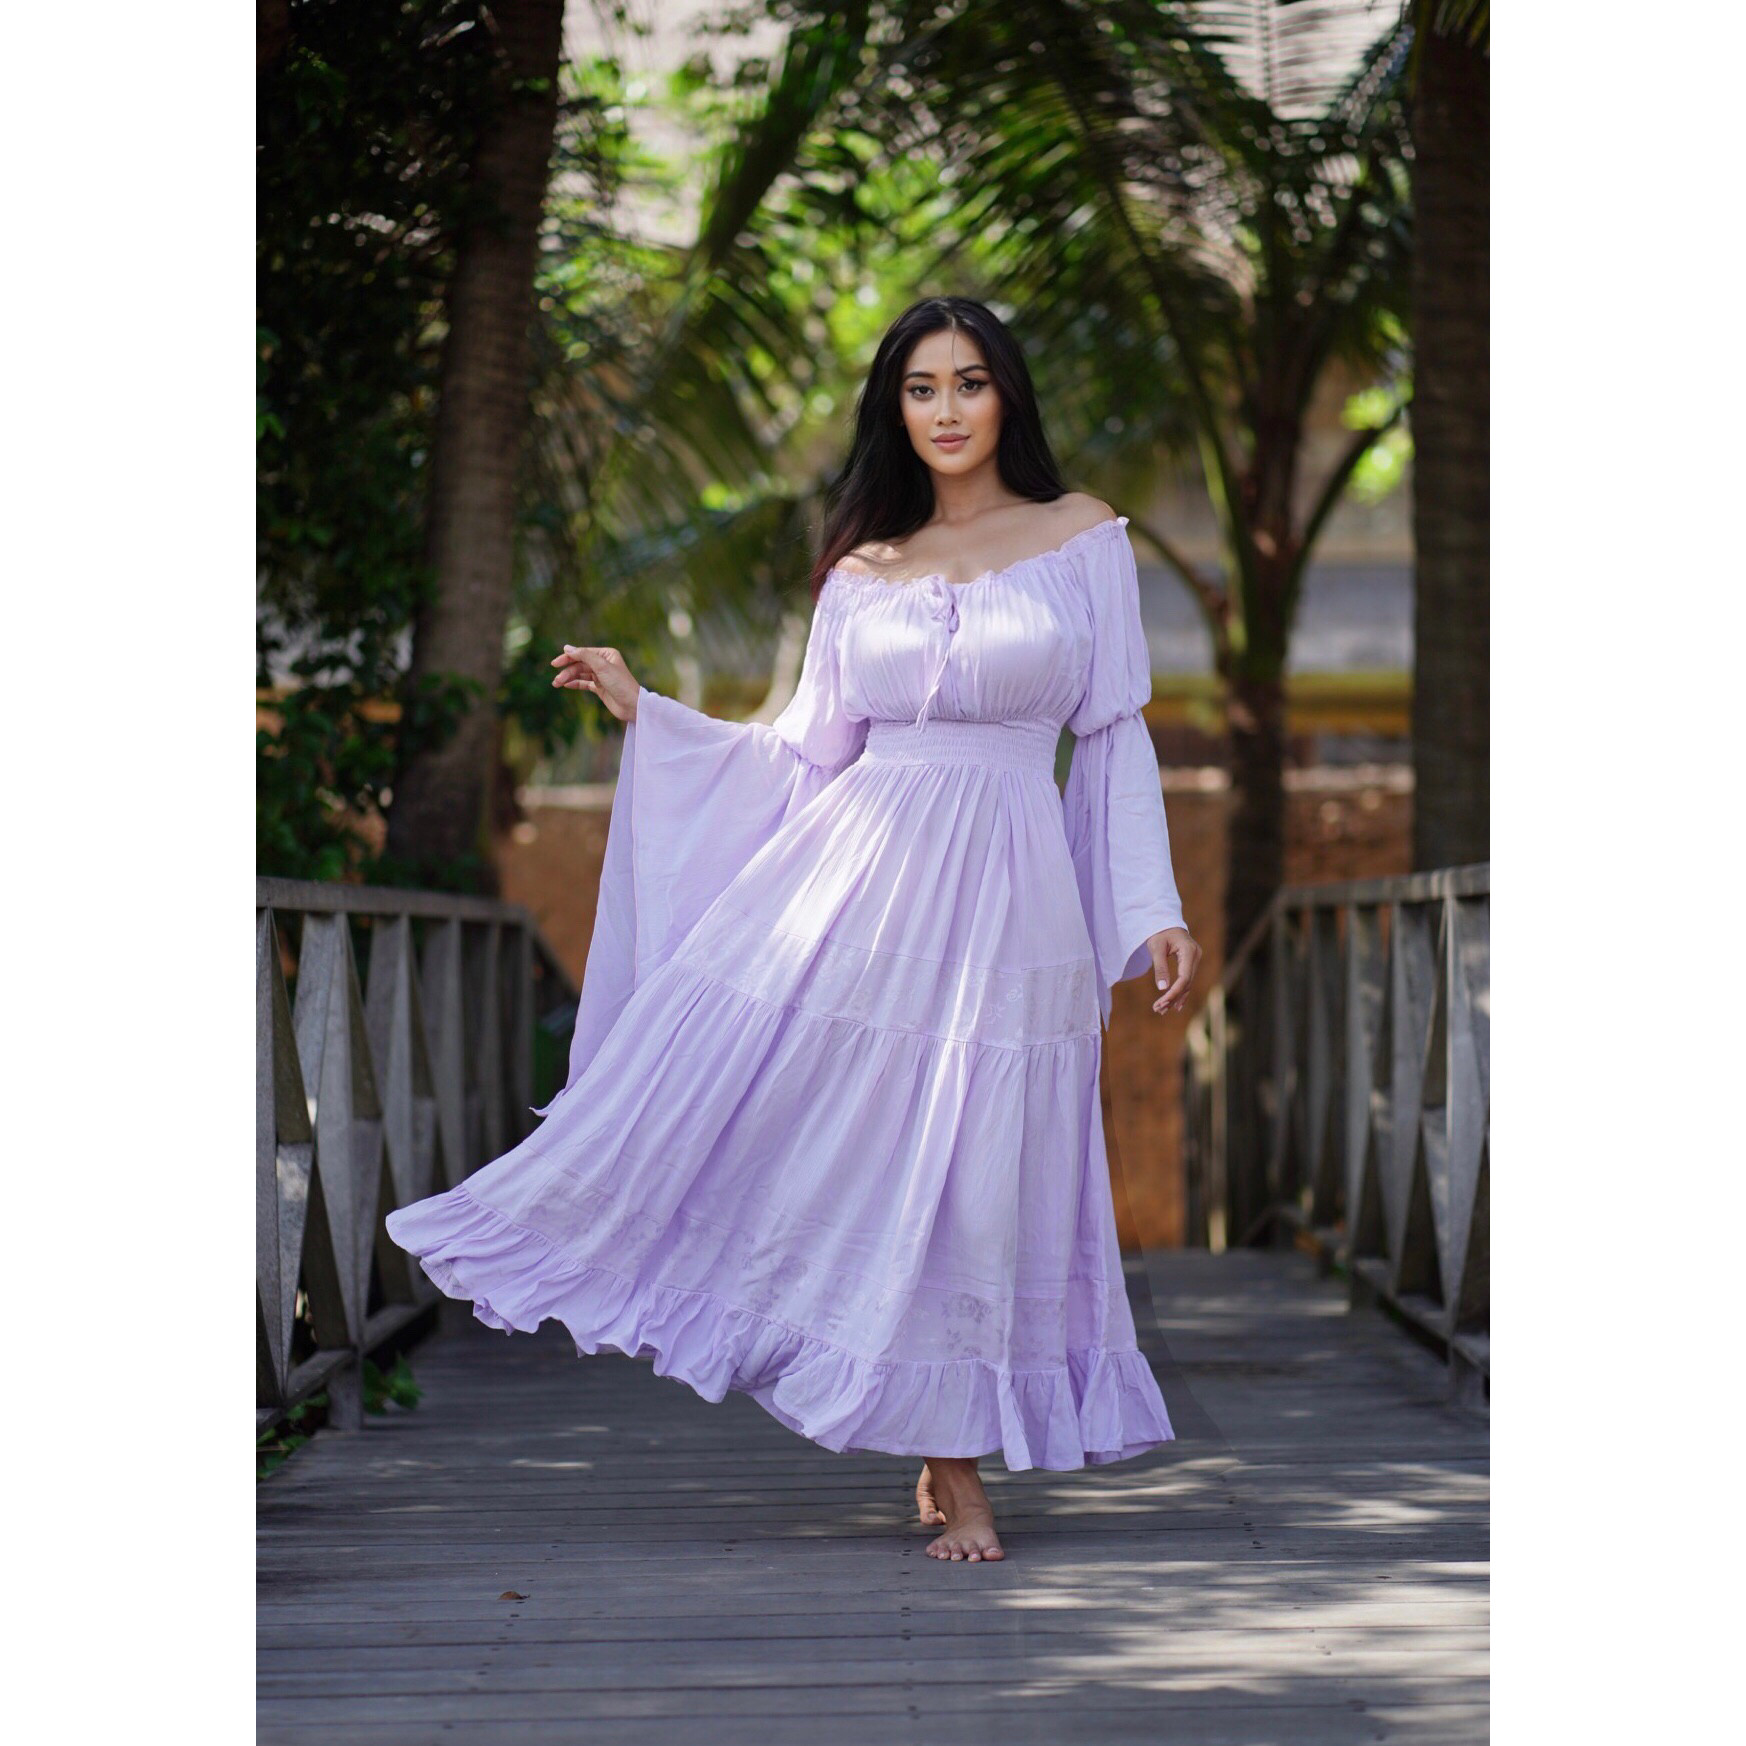 Persephone Gorgeous Boho Lace Maxi Dress – Weekend Vibes Apparel